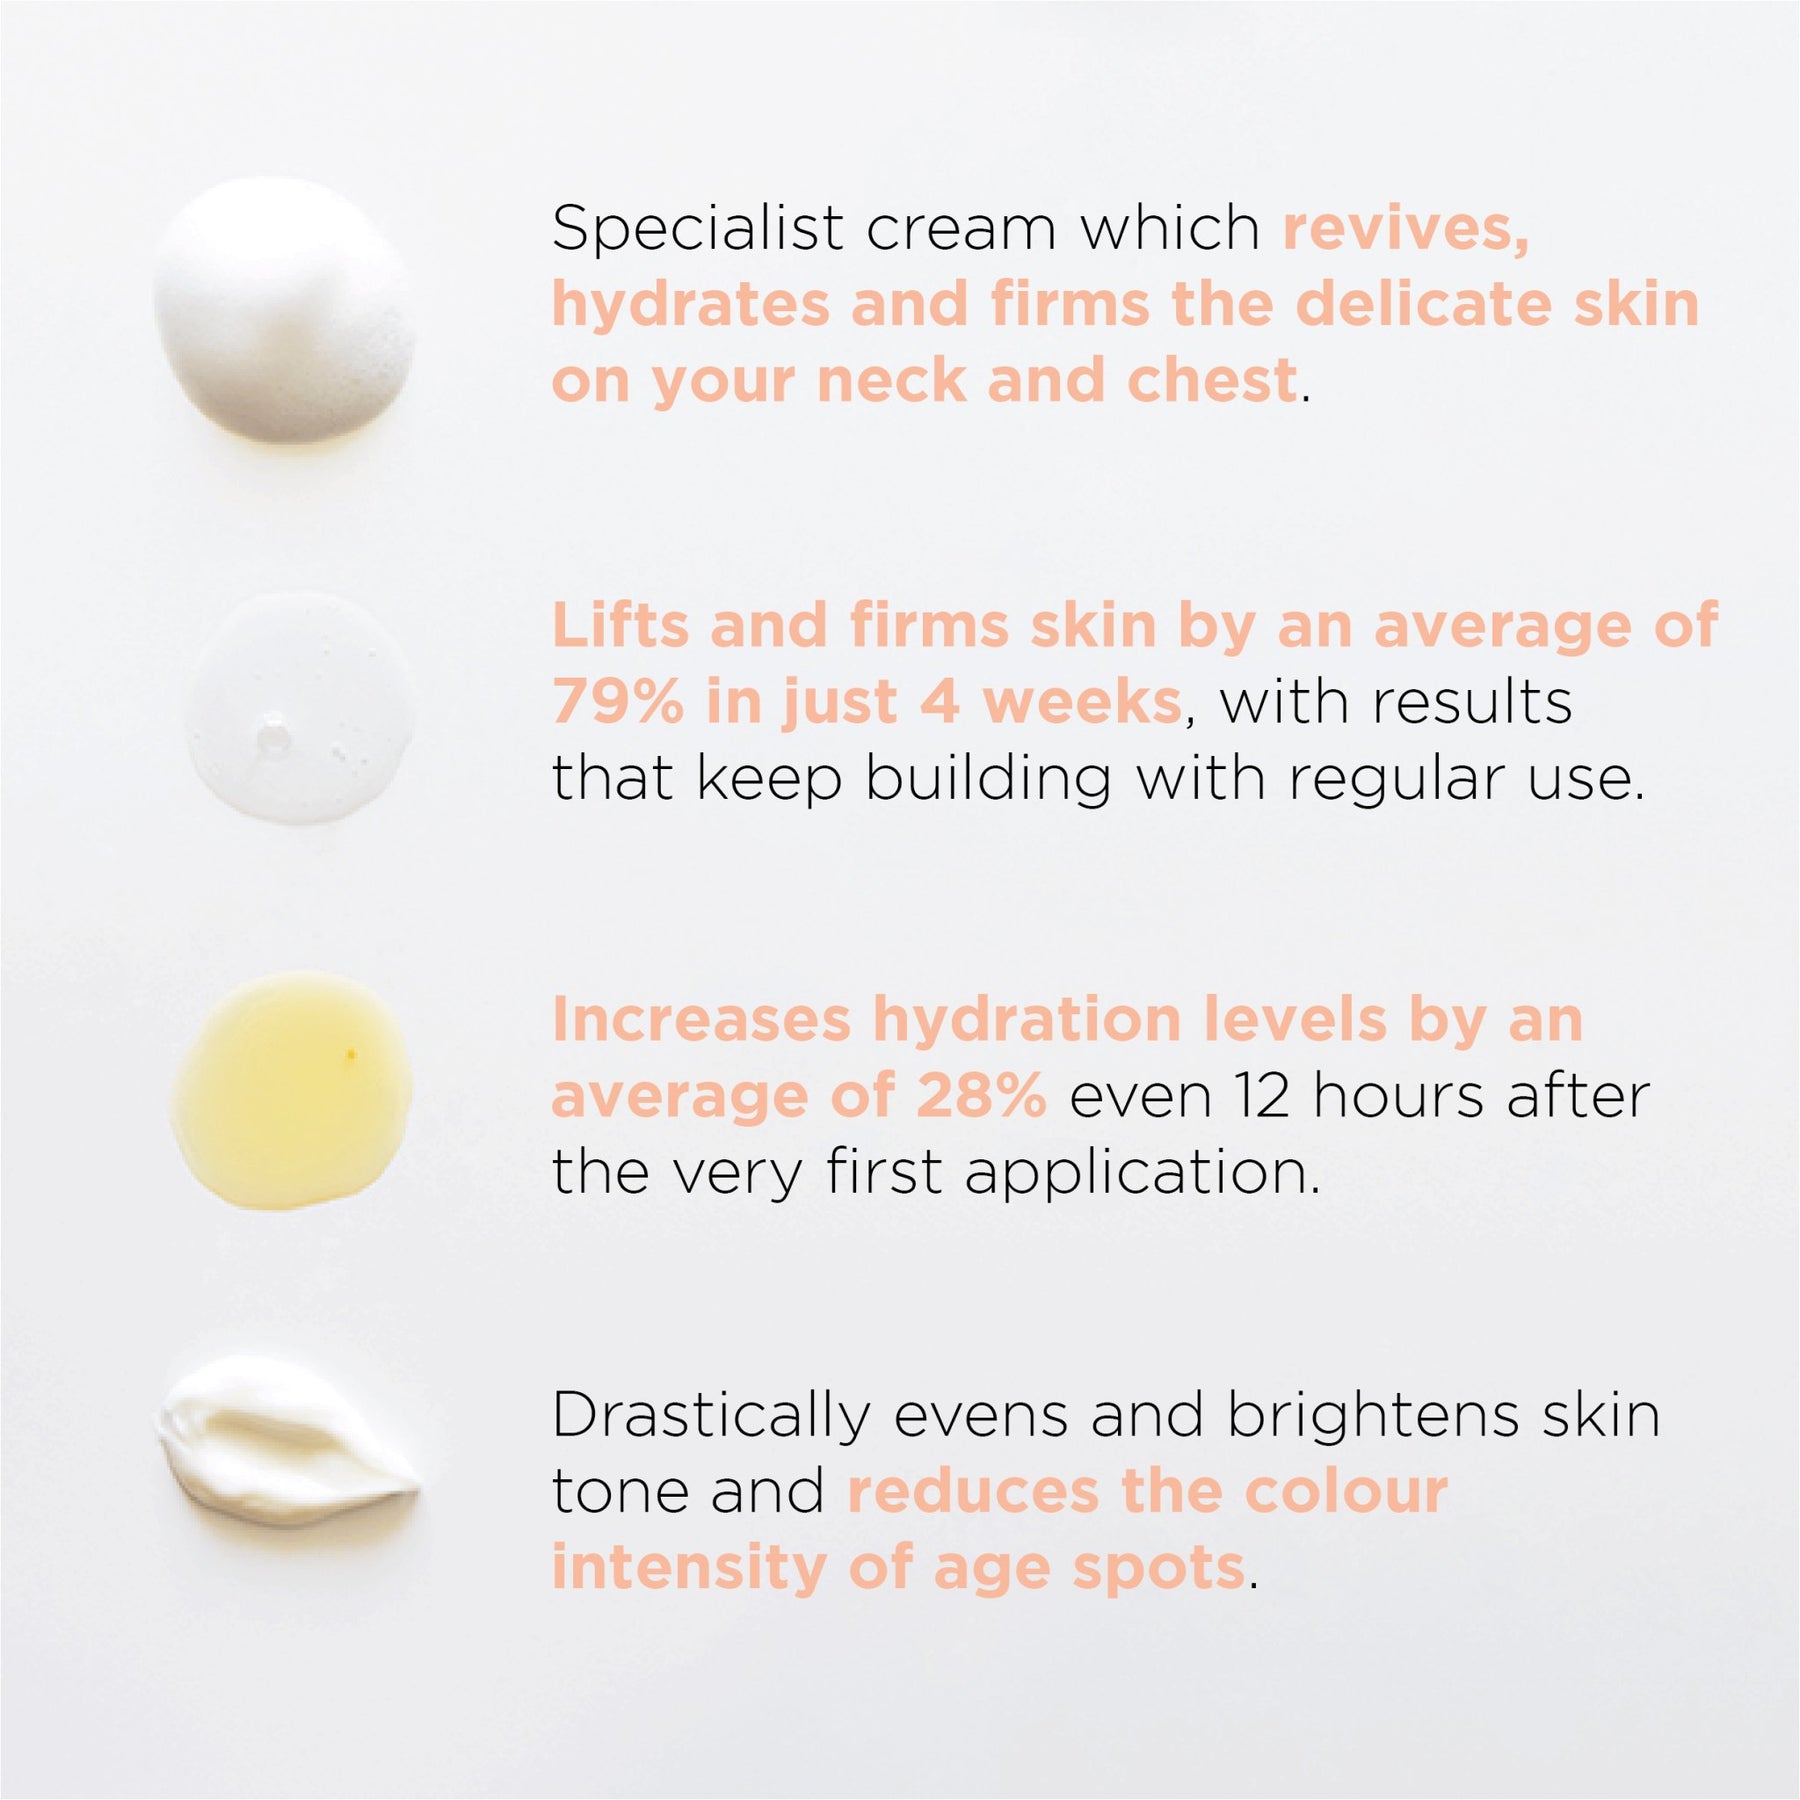 Neck & Chest Rejuvenating Serum - MIE Skincare